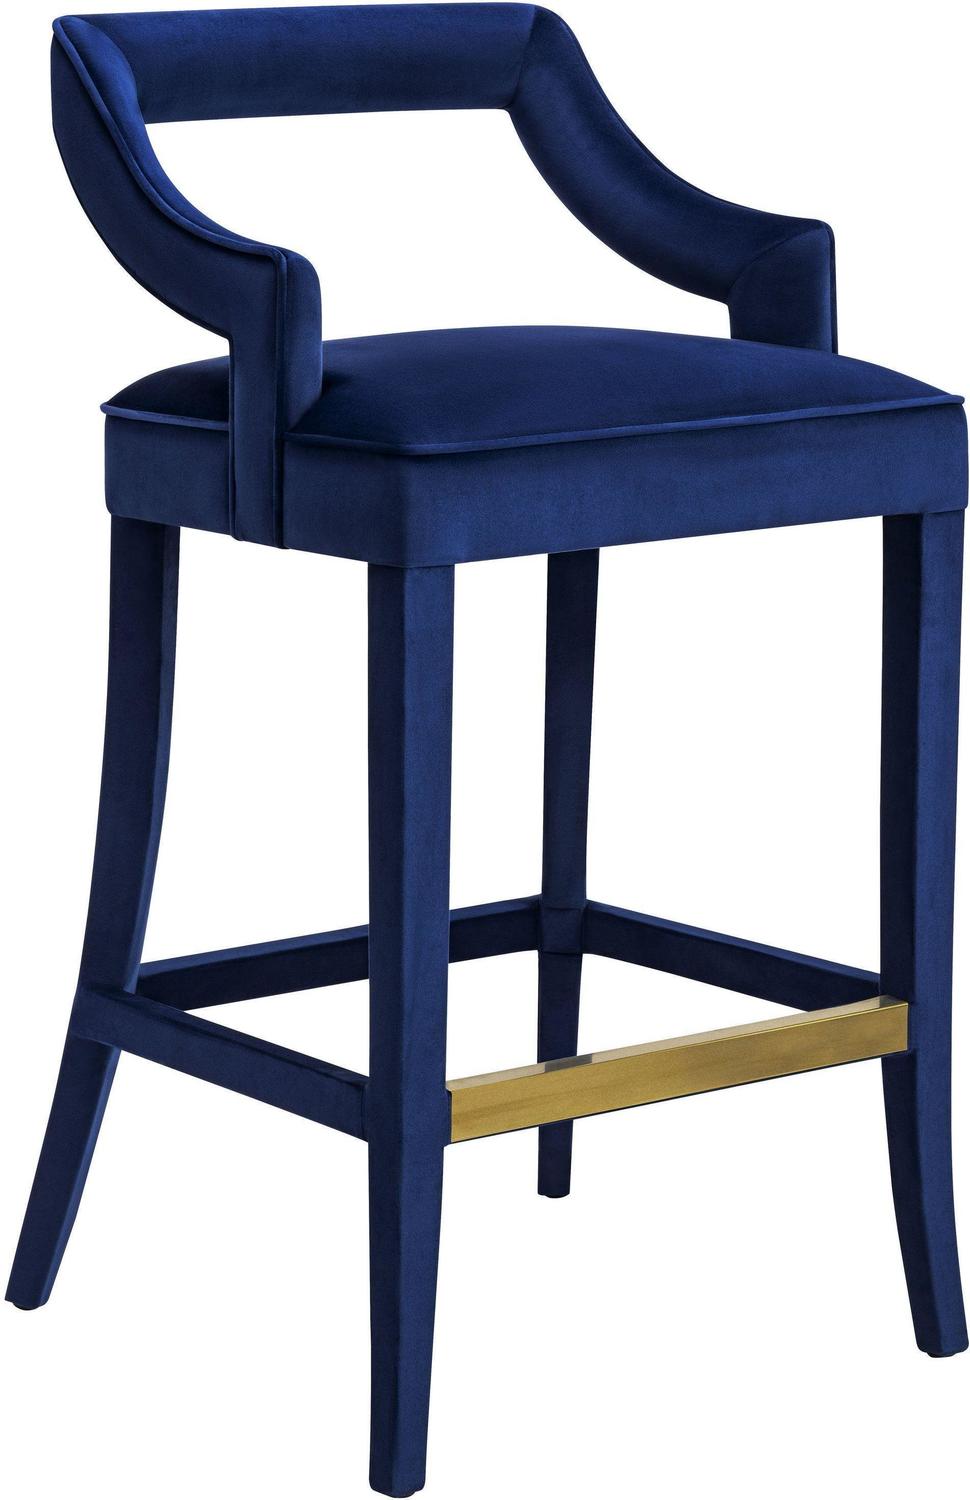 swivel bar stools near me Tov Furniture Stools Navy